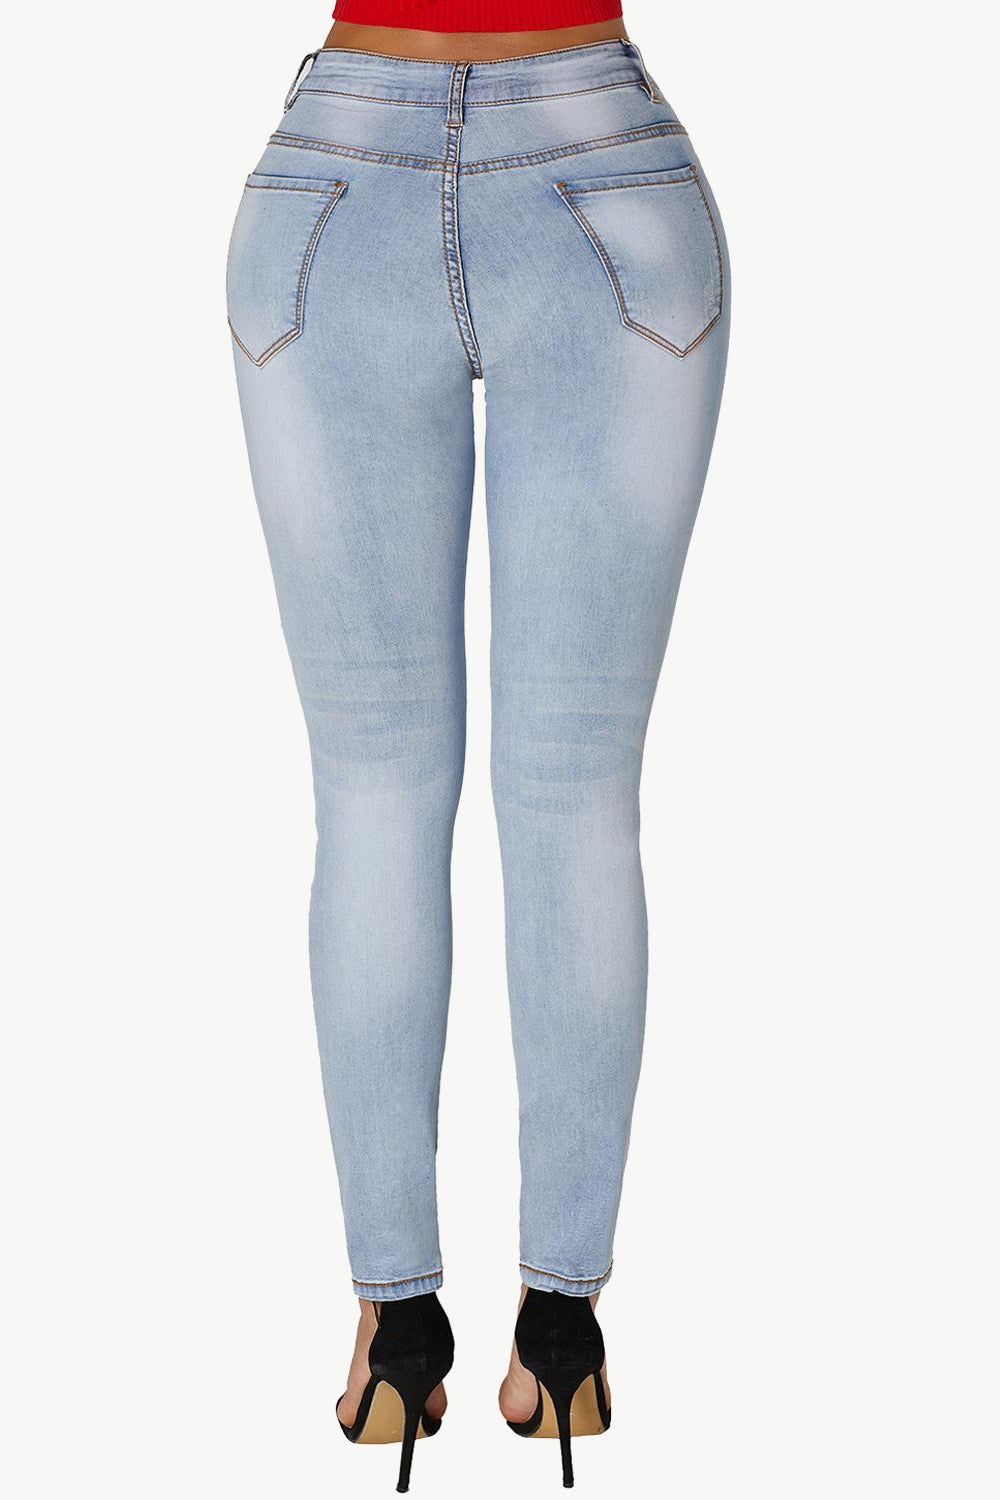 Acid Wash Ripped Skinny Jeans - DromedarShop.com Online Boutique